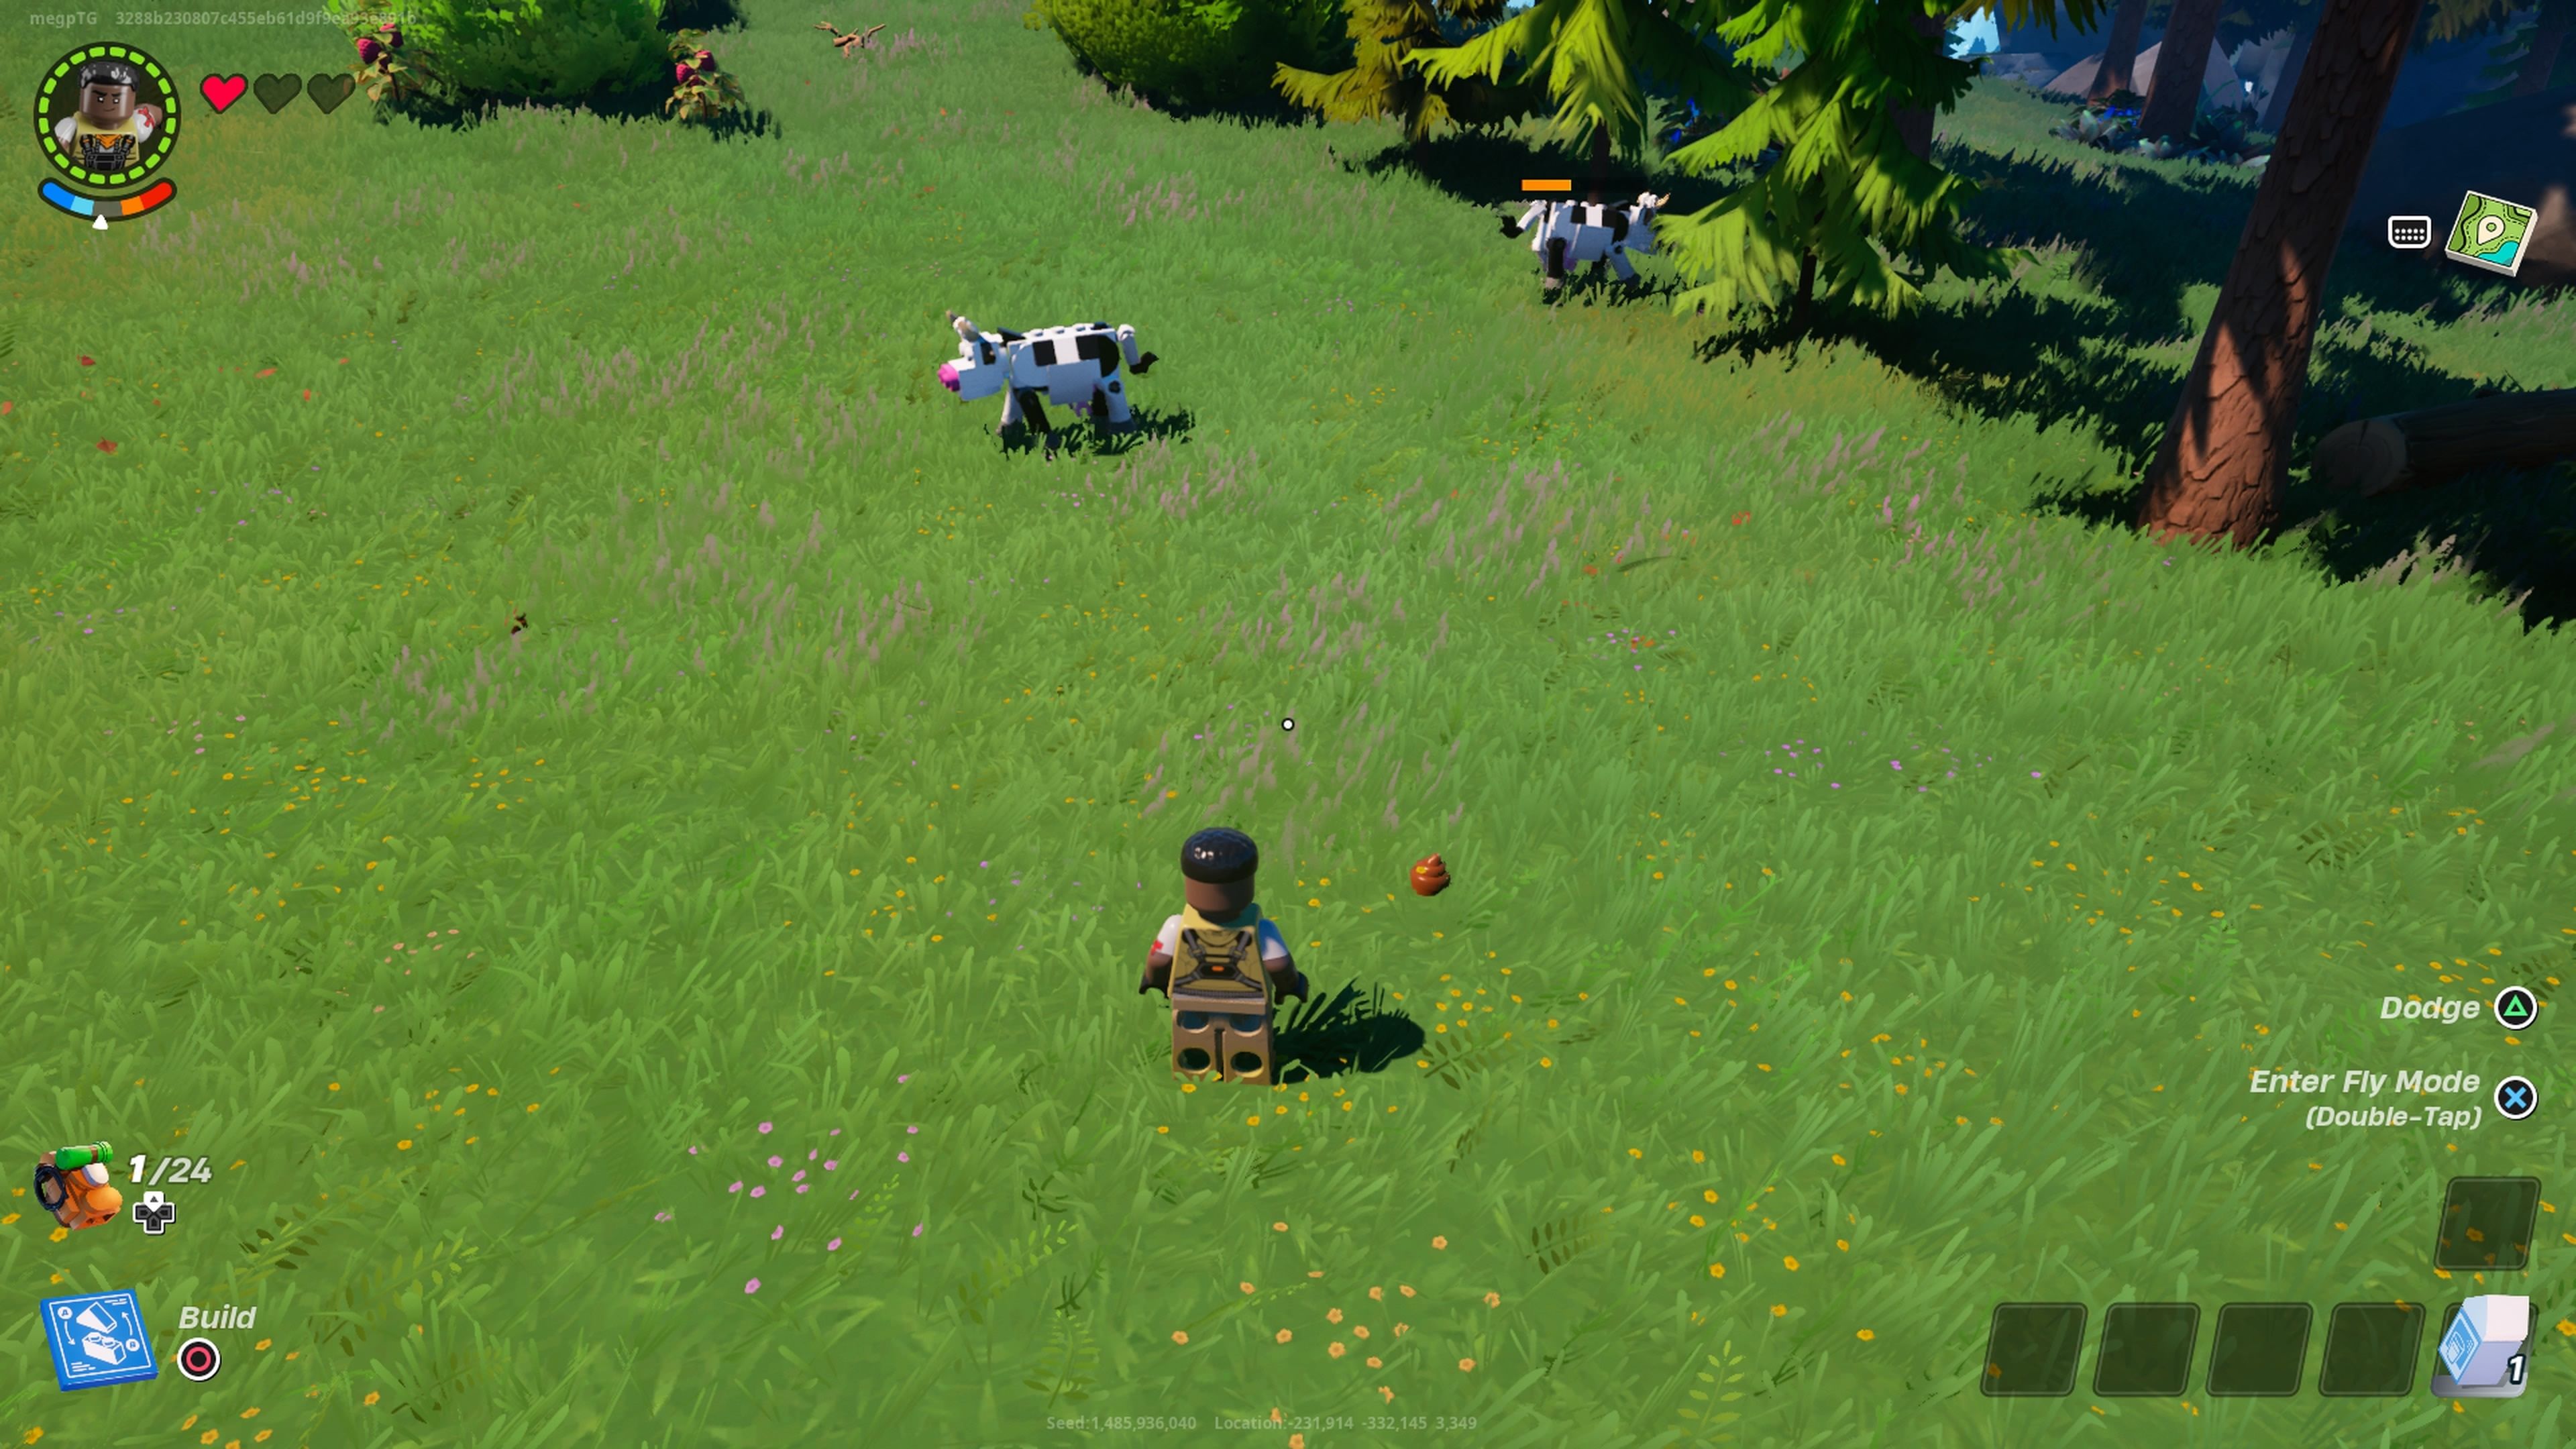 Someone beside some Fertilizer near a cow in Lego Fortnite.